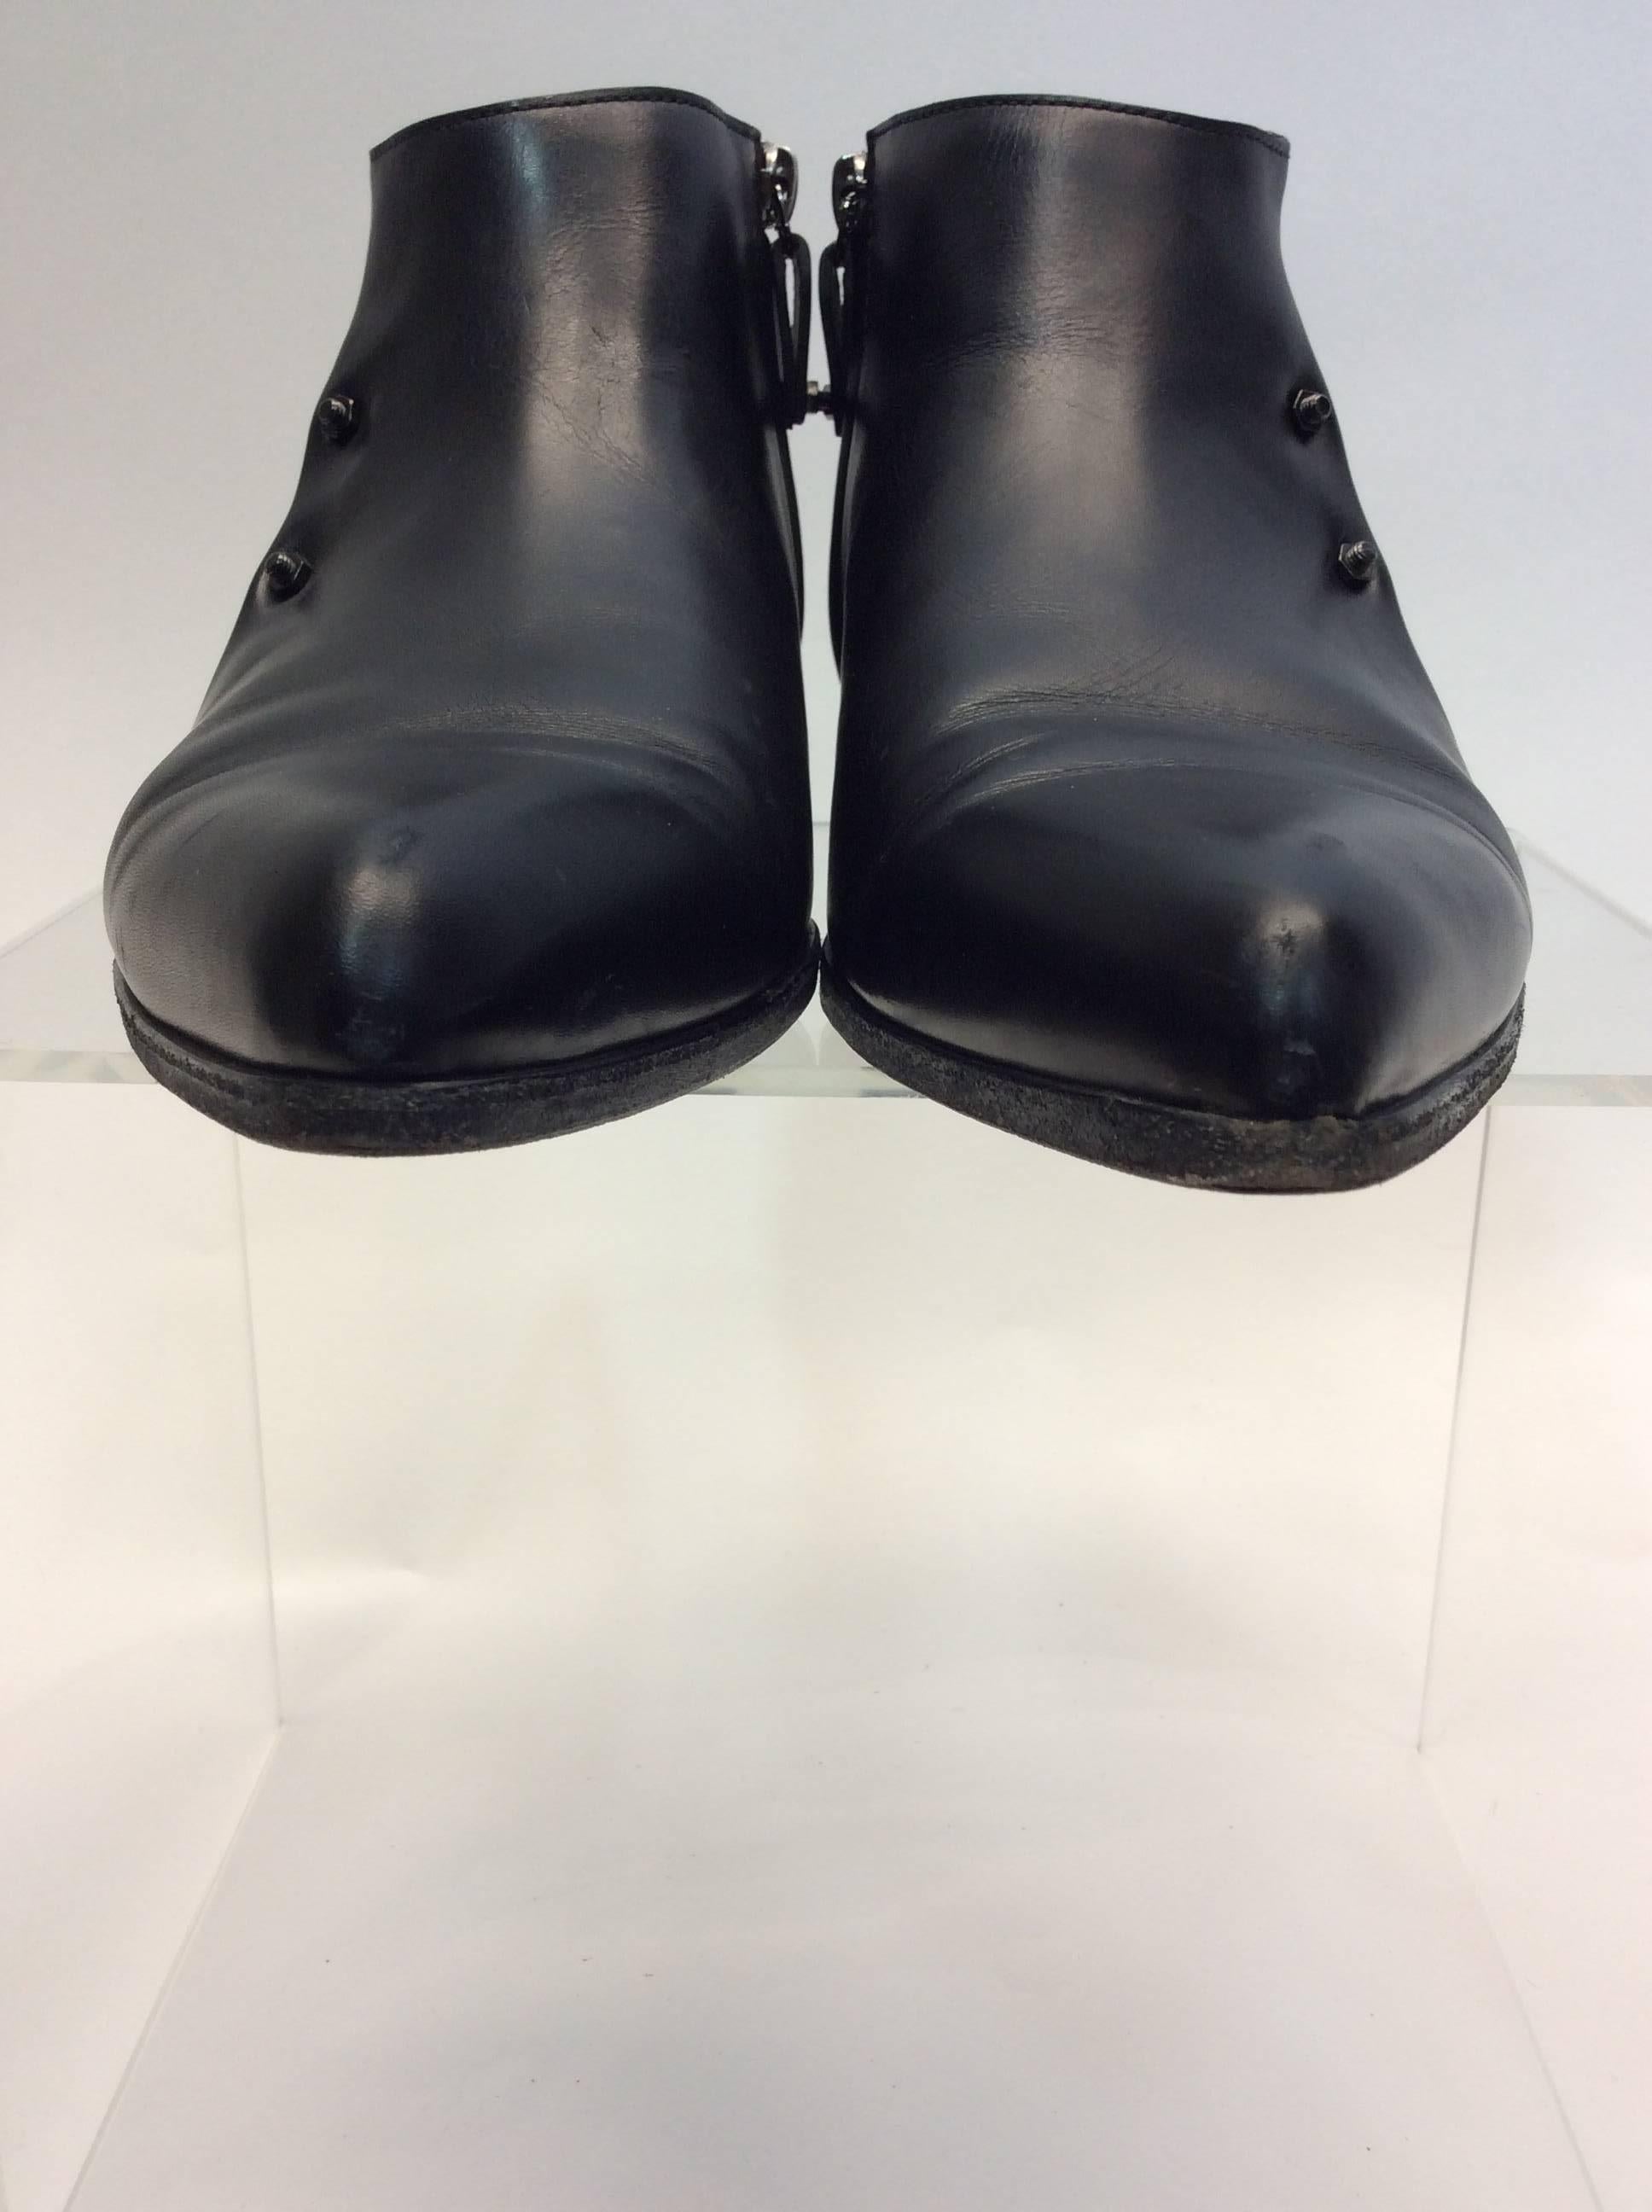 Lanvin Black Short Ankle Leather Boots
Size 37.5
$299
Interior zipper
